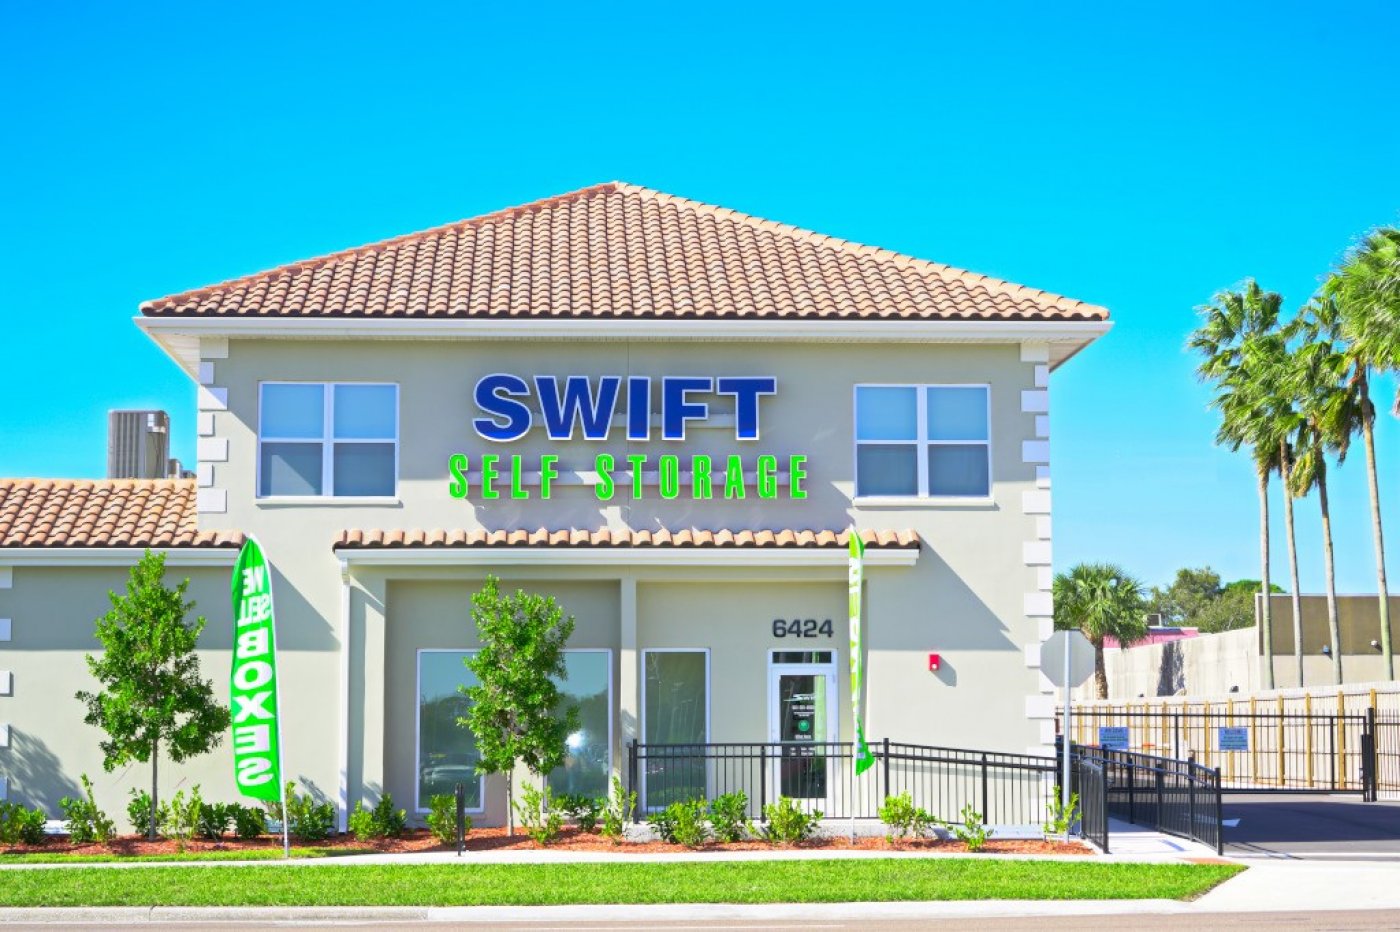 Swift Storage in Bradenton, FL